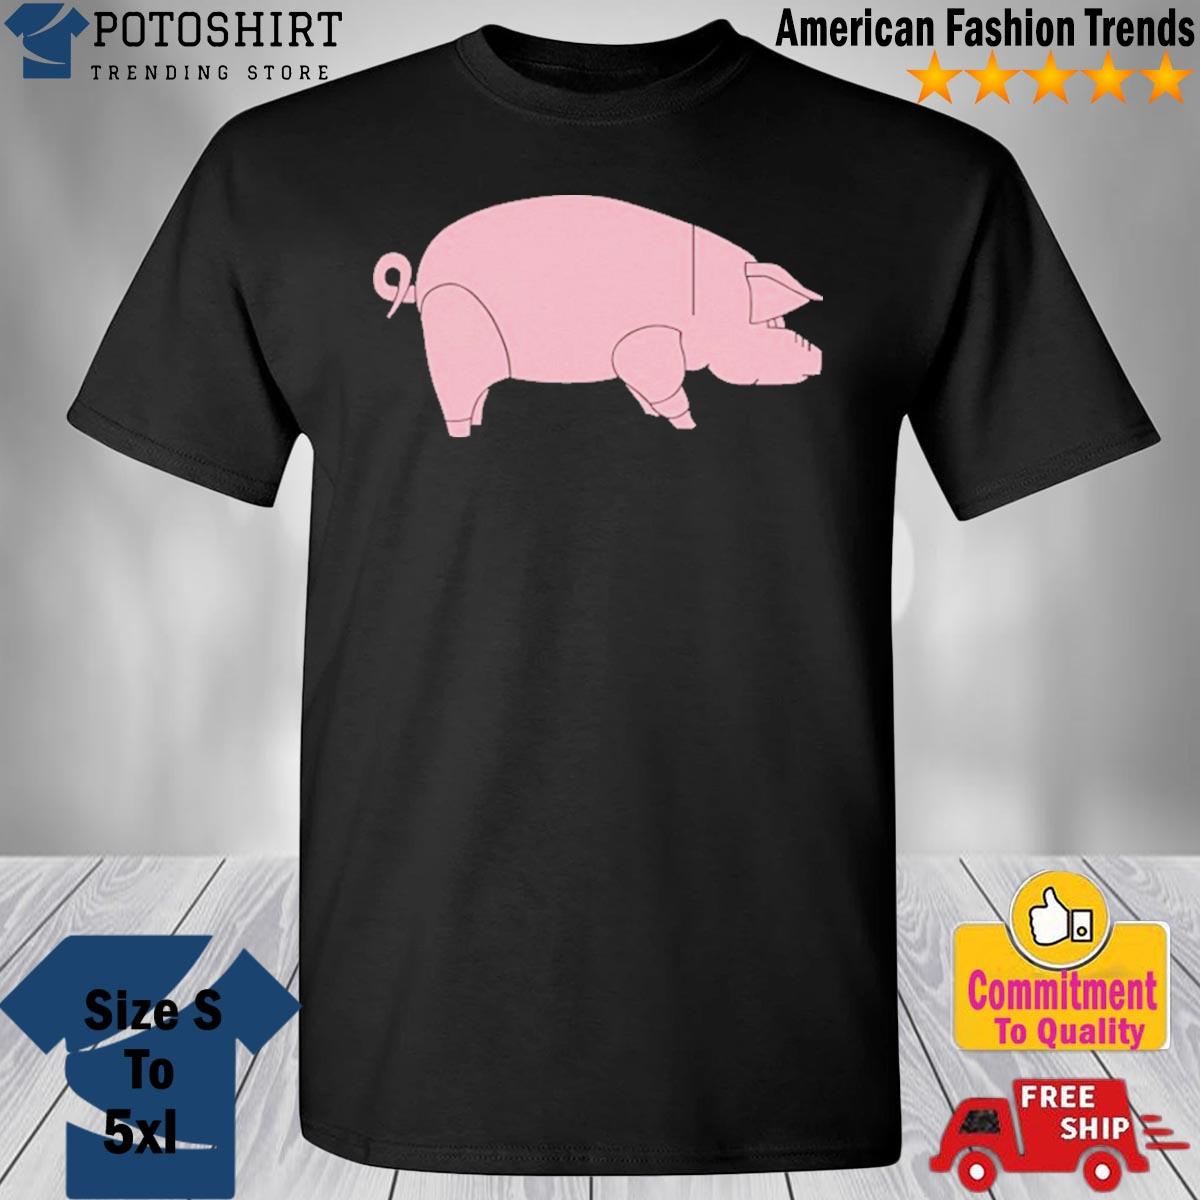 The Legendary Pig Shirt